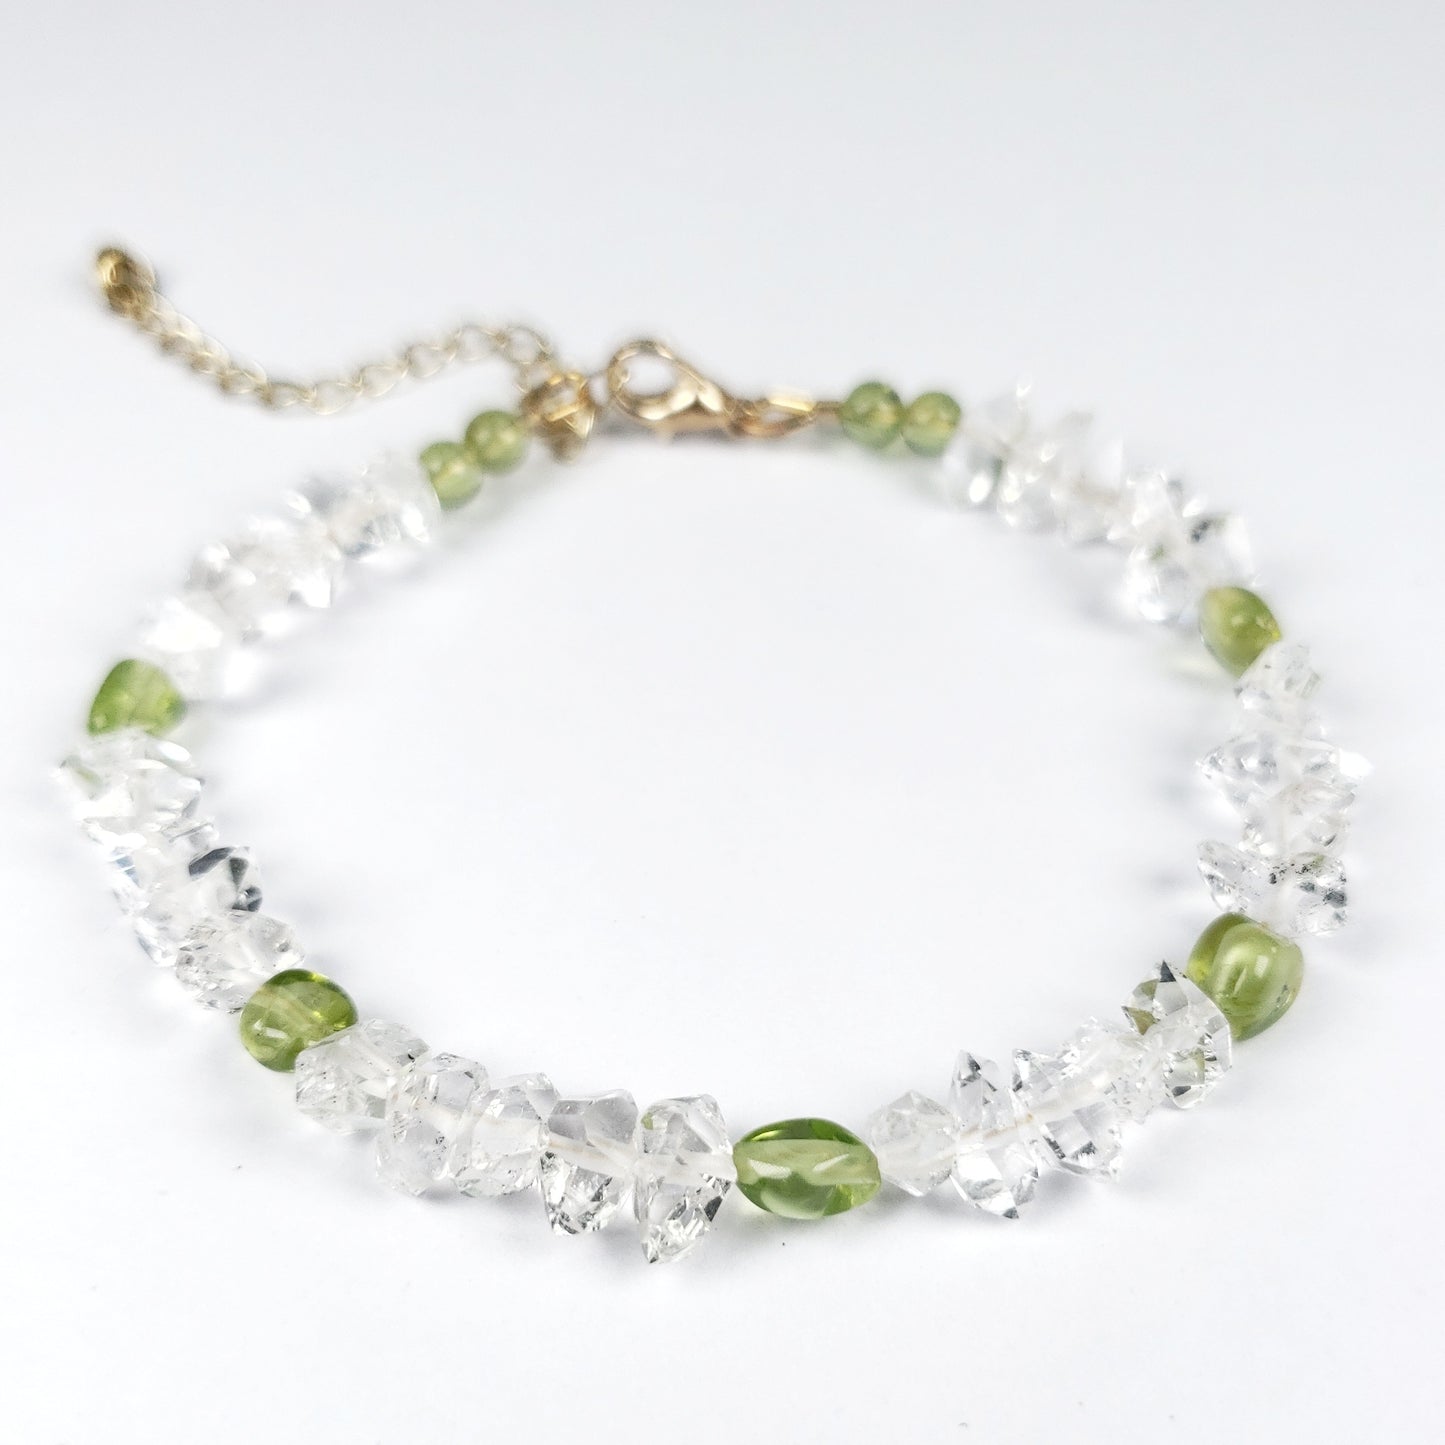 Enchanted Herkimer bracelet 祈願閃靈鑽手鏈 - Wealth(橄欖石)